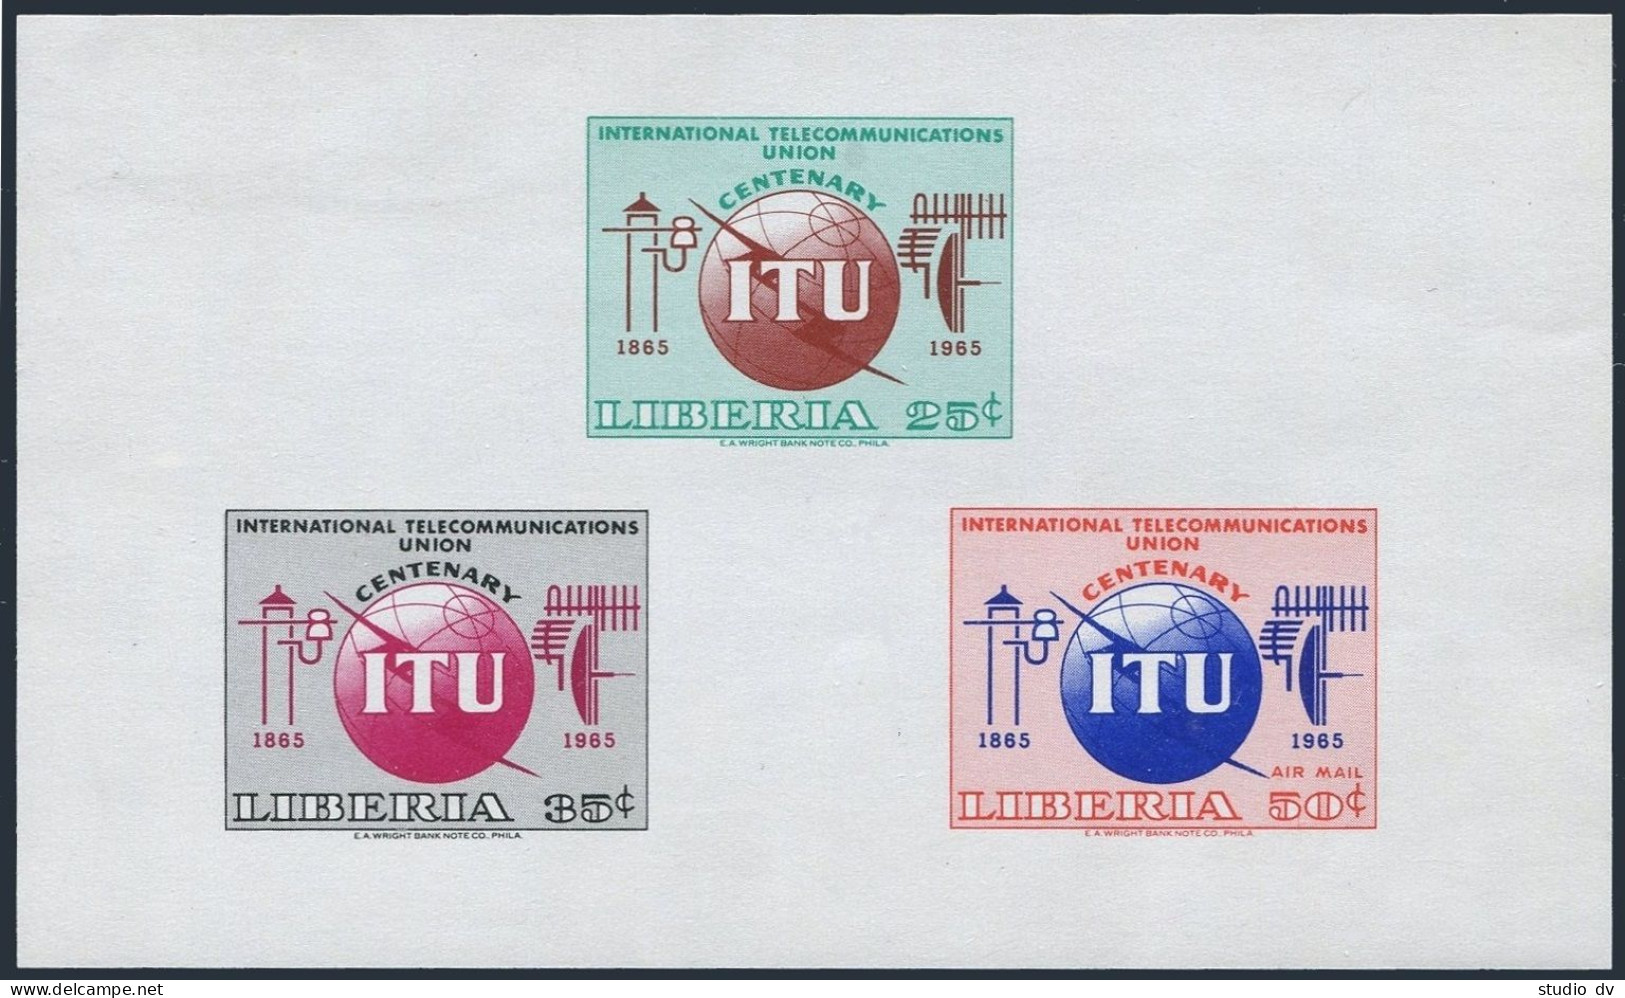 Liberia 429-430,C168,C168a Deluxe,MNH. ITU-100,1965.Communication Equipment. - Liberia